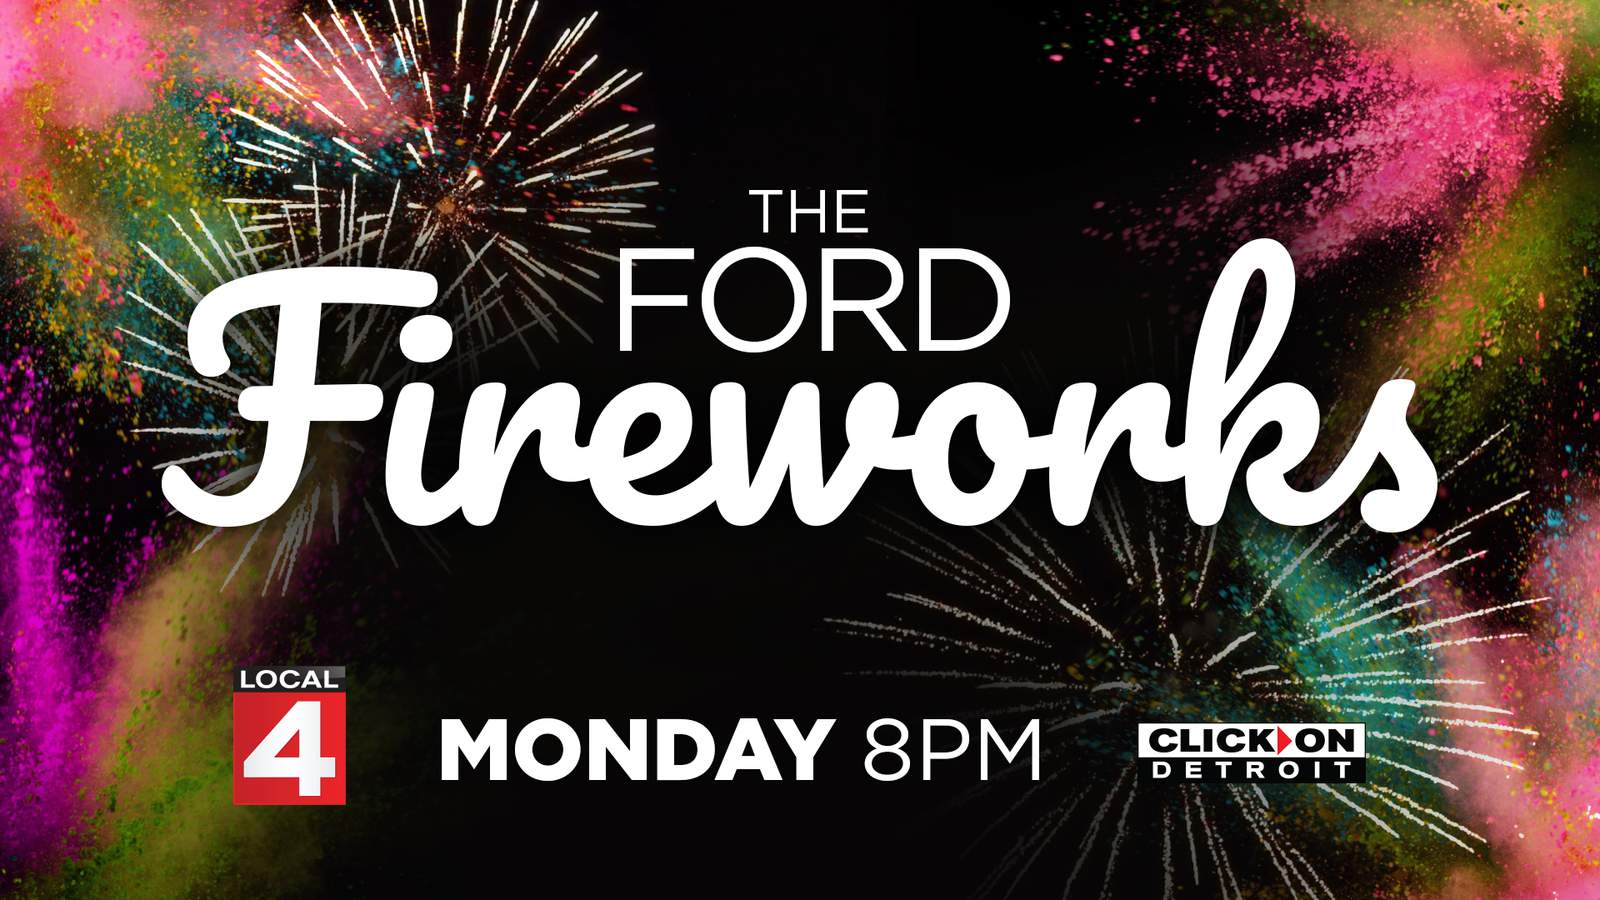 Ford fireworks